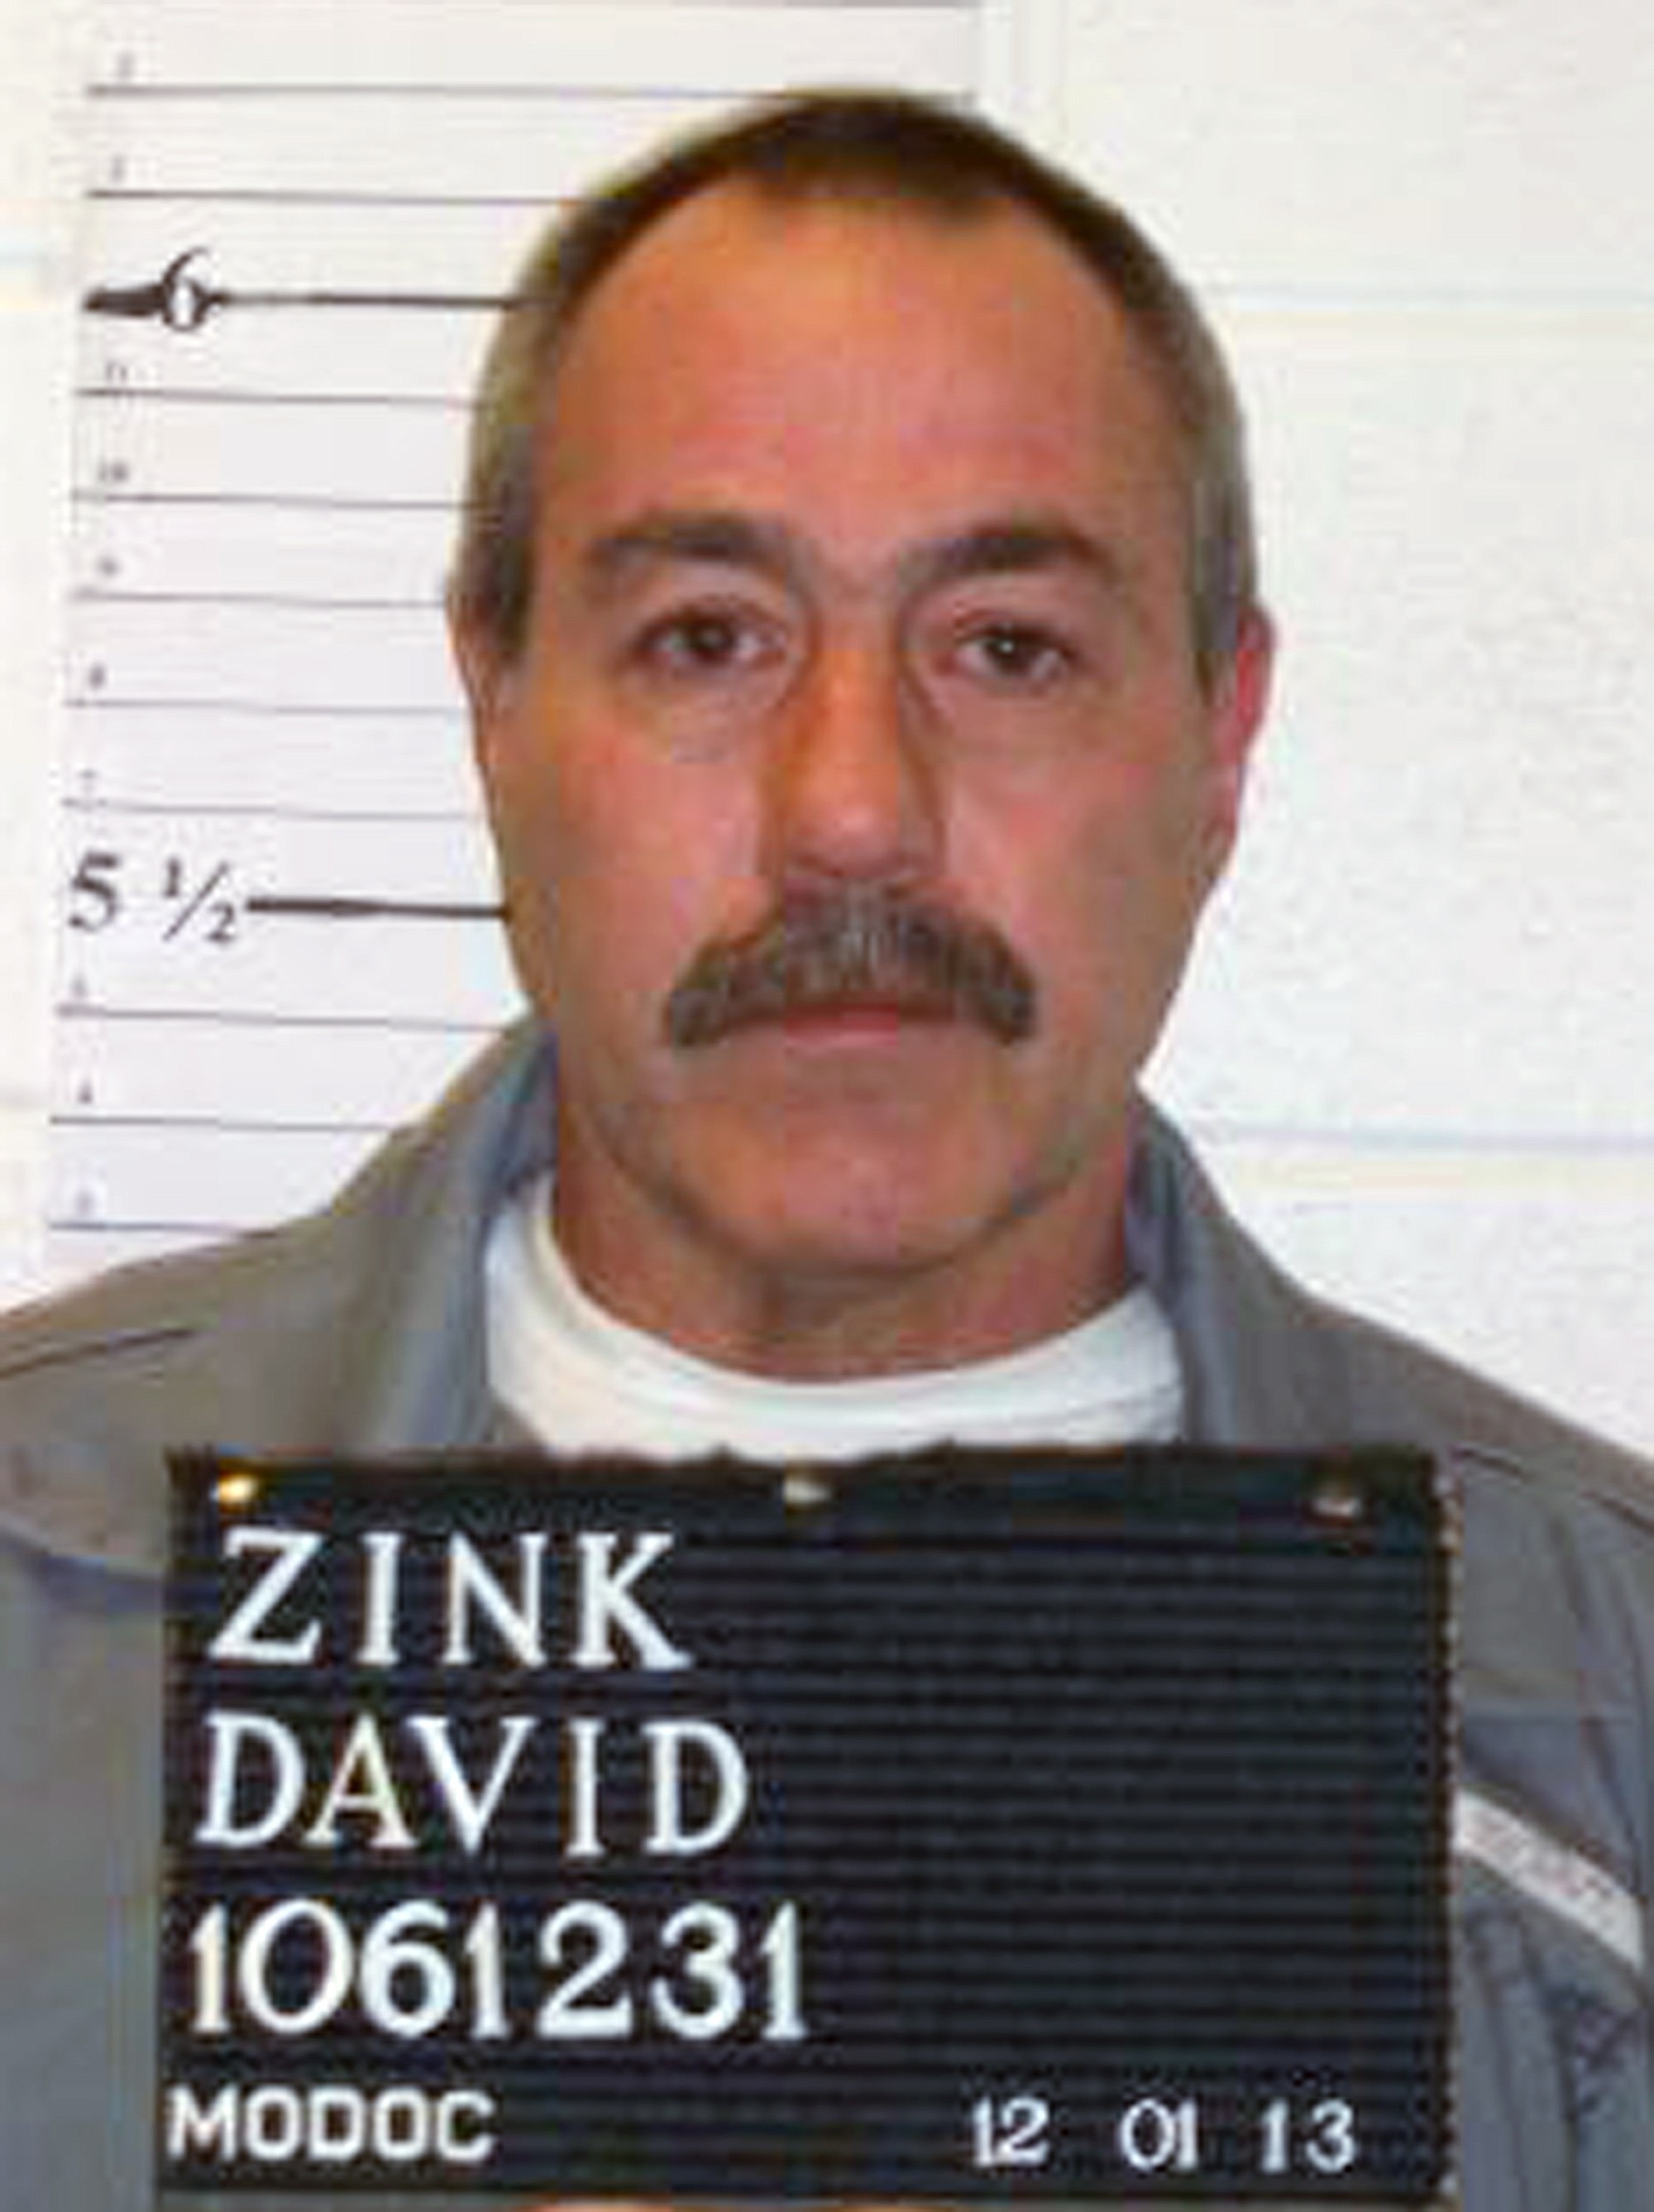 David Zink
Executed Tuesday